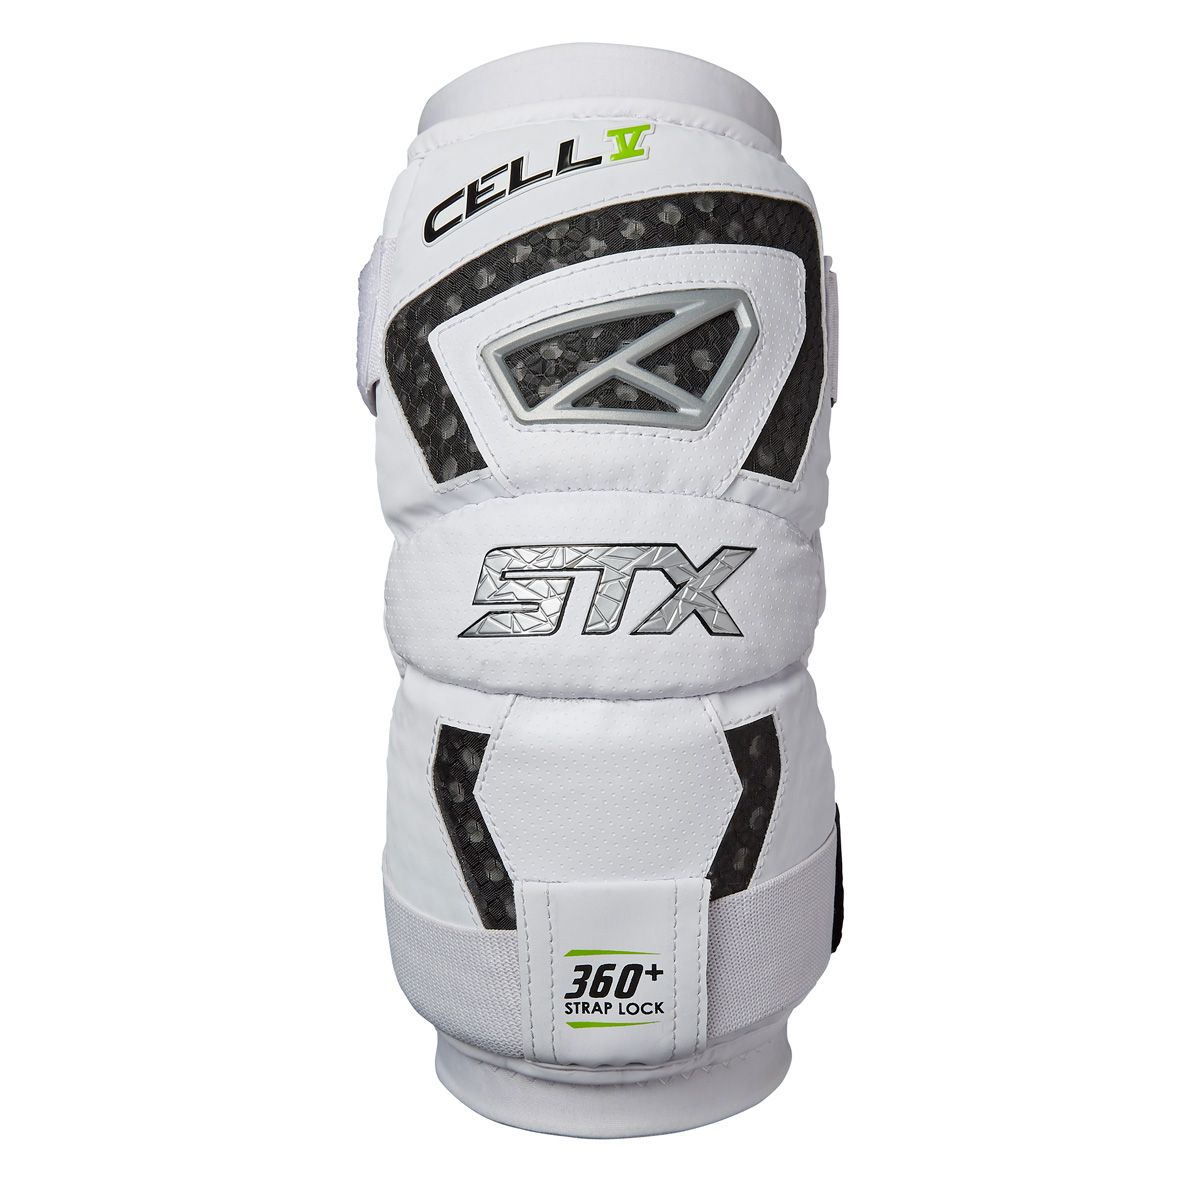 STX Cell V Arm Pad-Universal Lacrosse